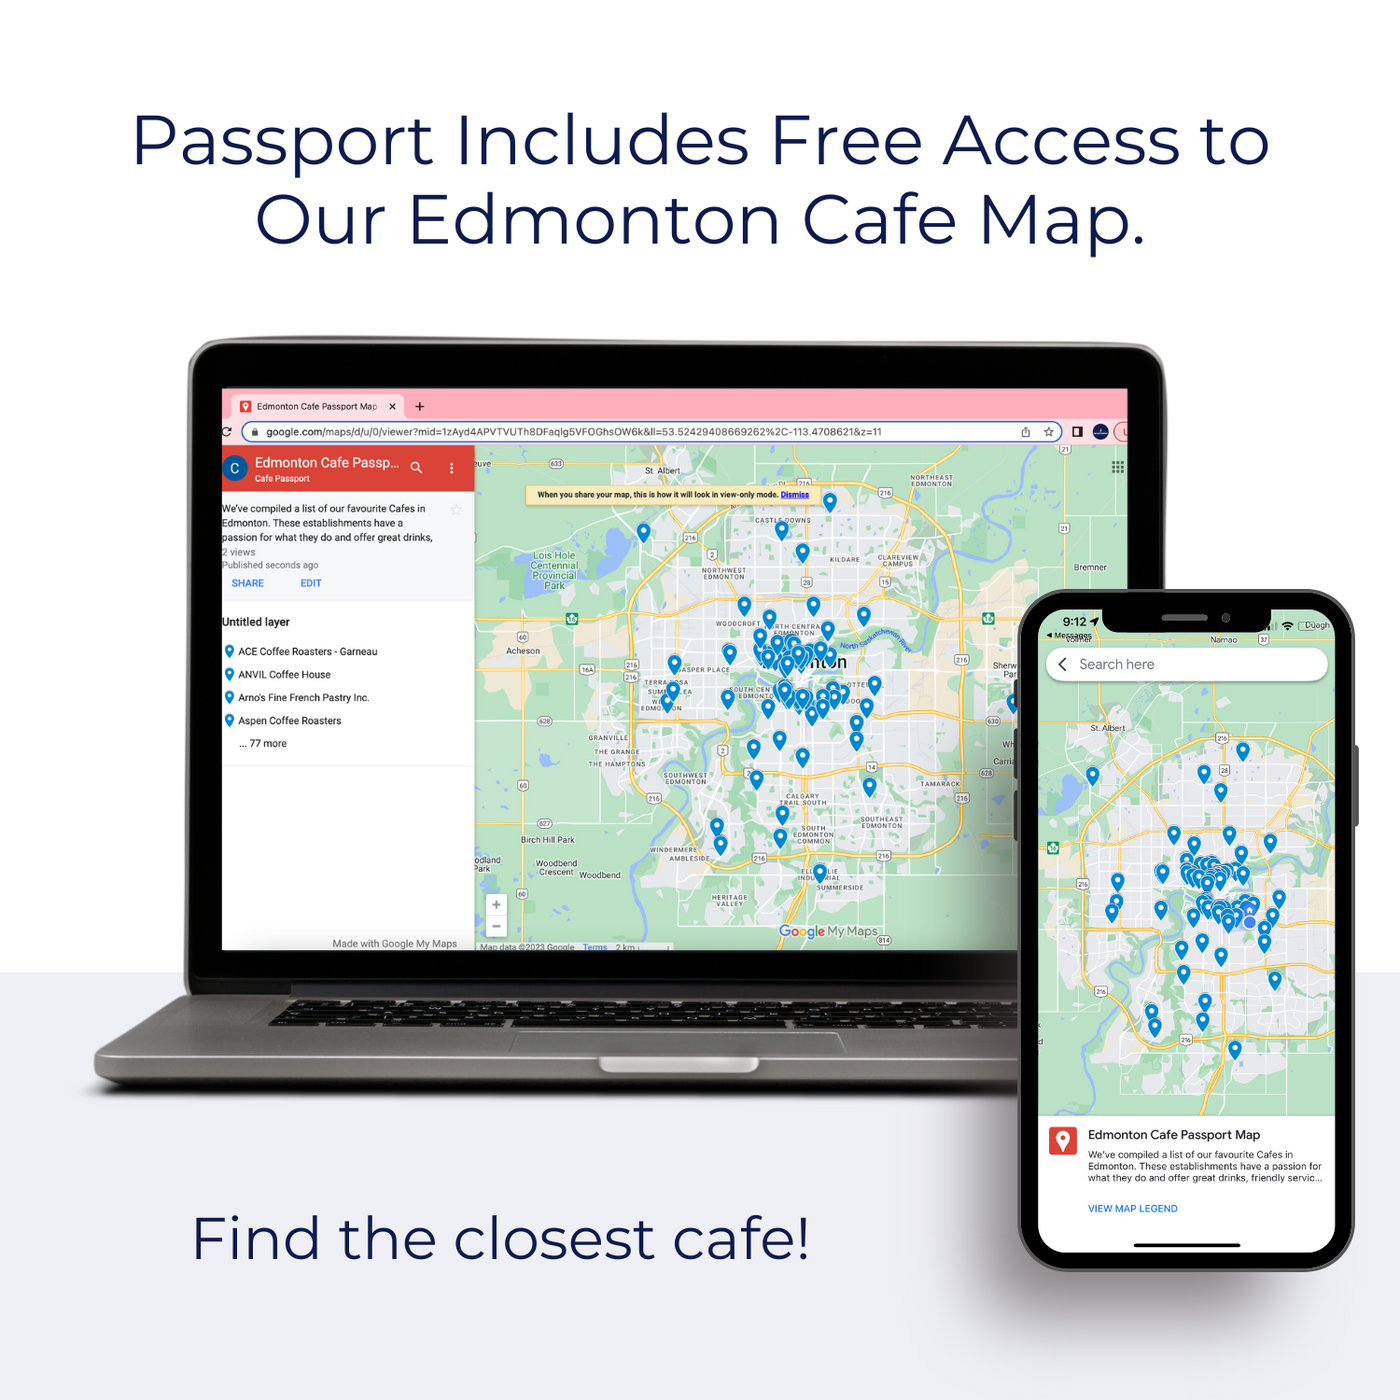 Edmonton Cafe Passport Map